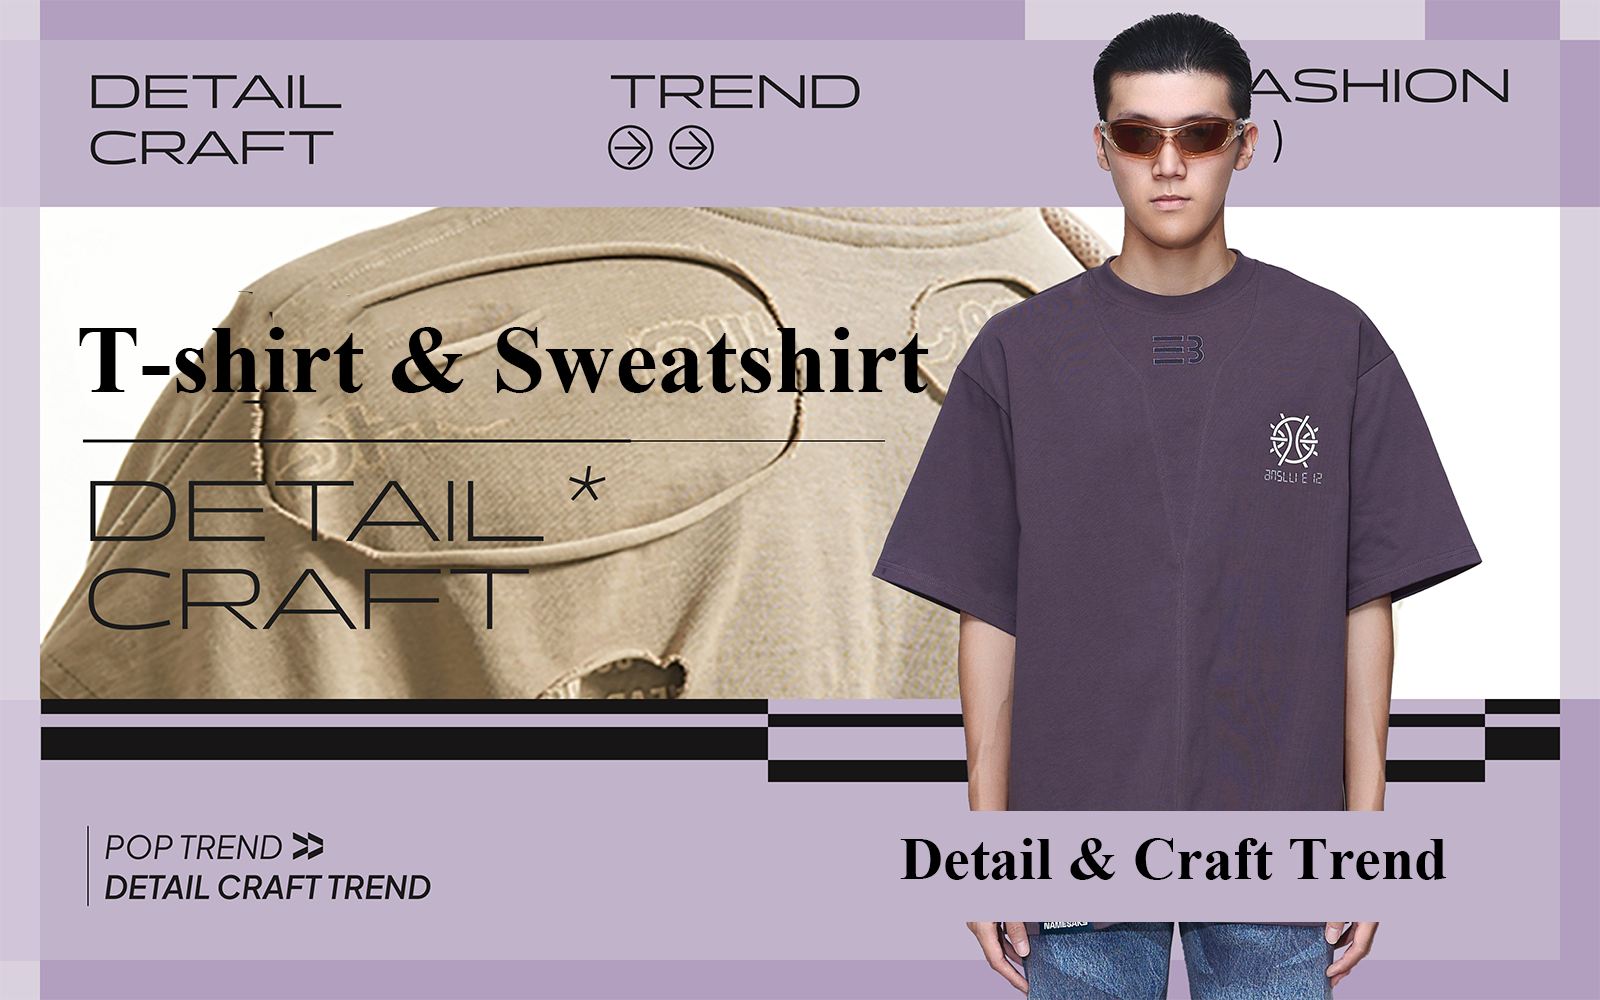 Emerging Street Fashion -- The Detail & Craft Trend for Men's T-shirt & Sweatshirt